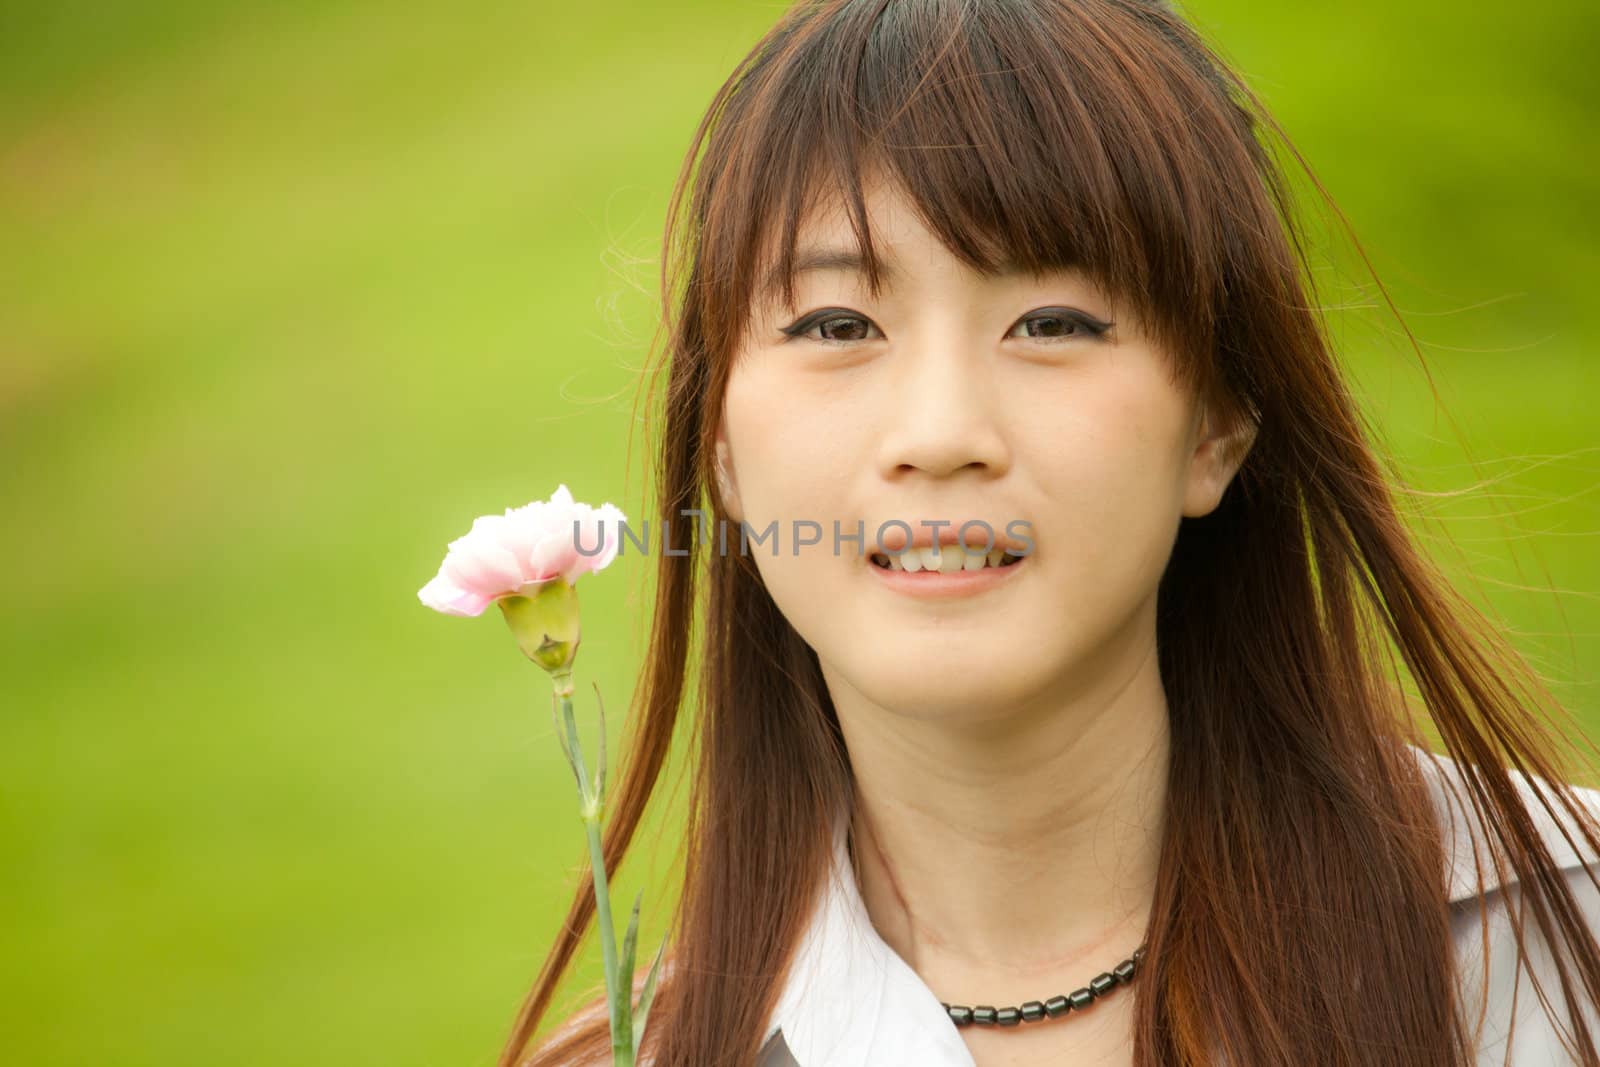 Thai girl holding her flower by artemisphoto